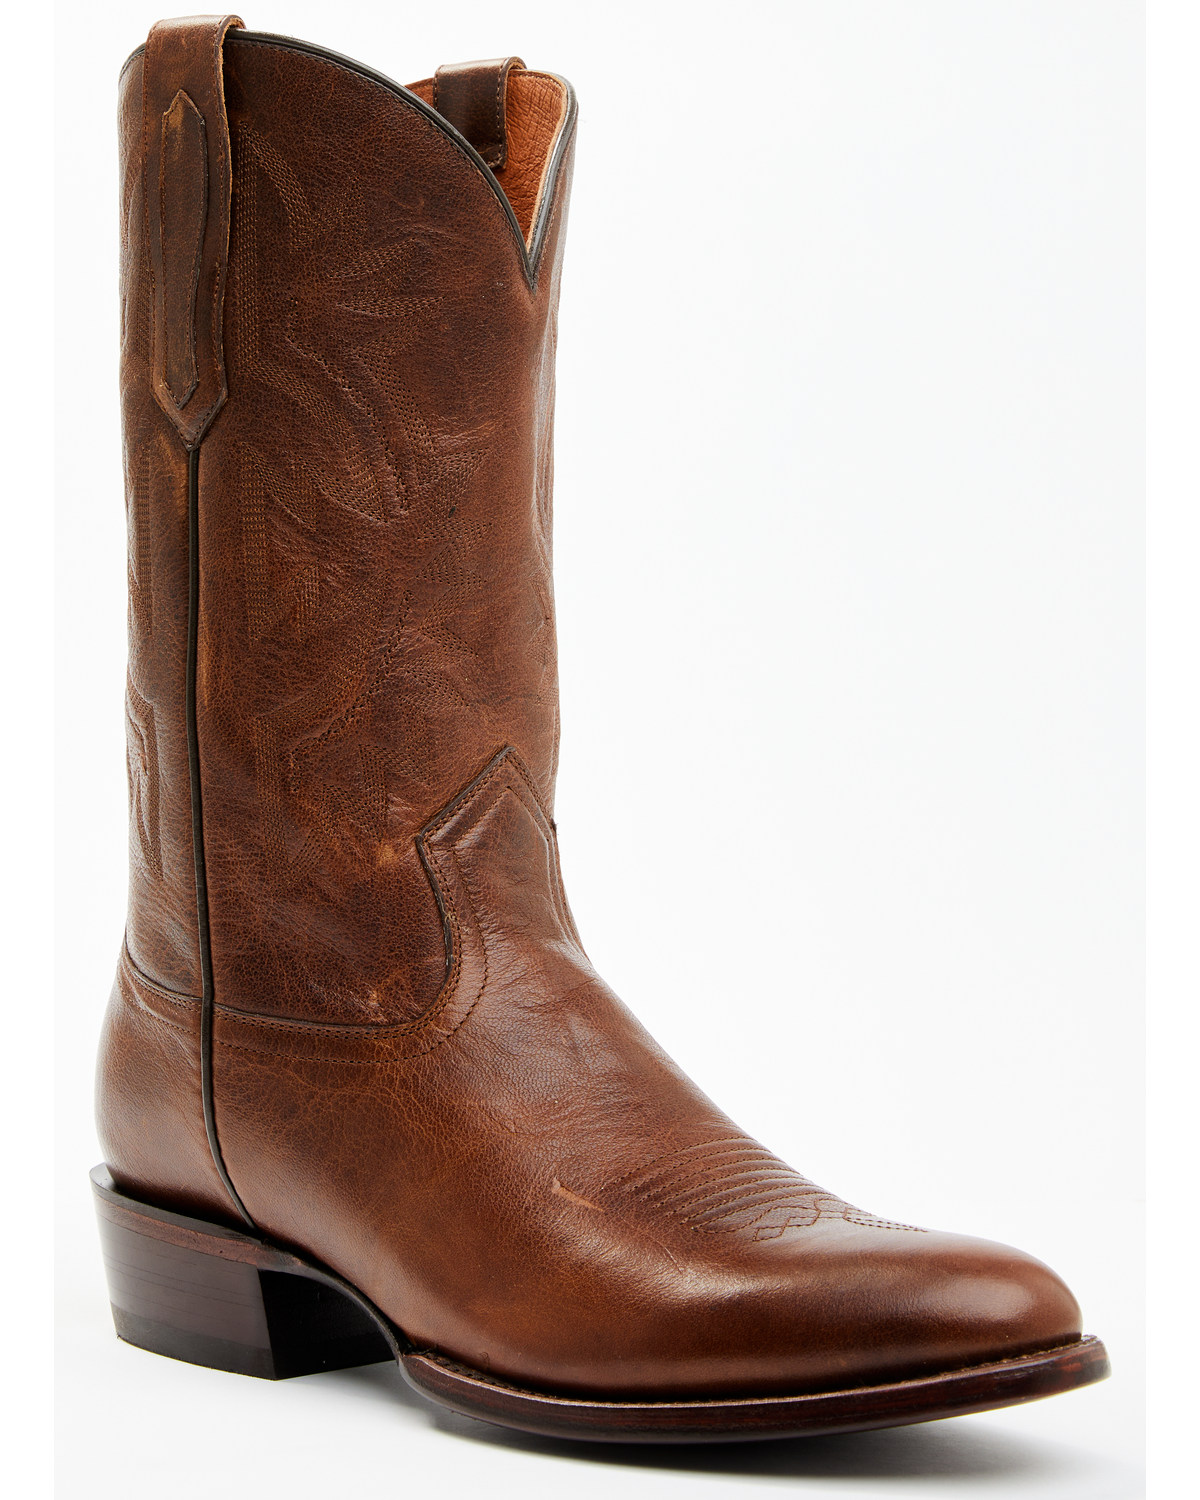 Cody James Men's Briana Western Boots - Medium Toe